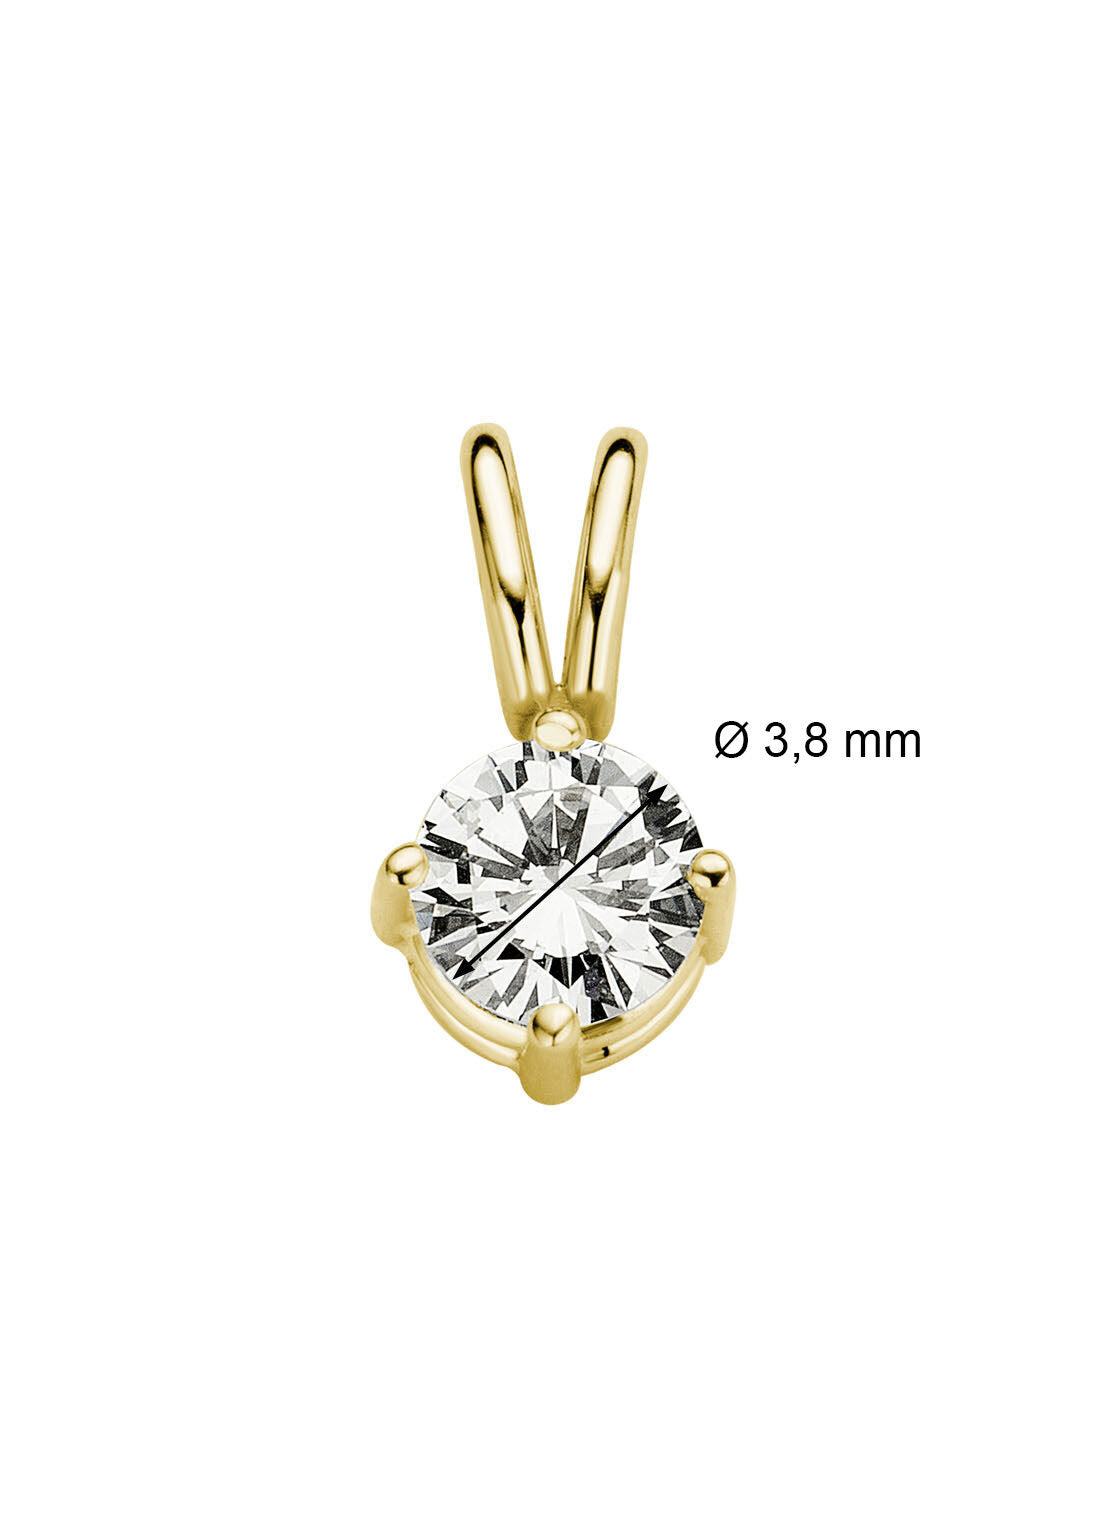 Yellow gold pendant, 0.23 ct diamond, Groeibriljant